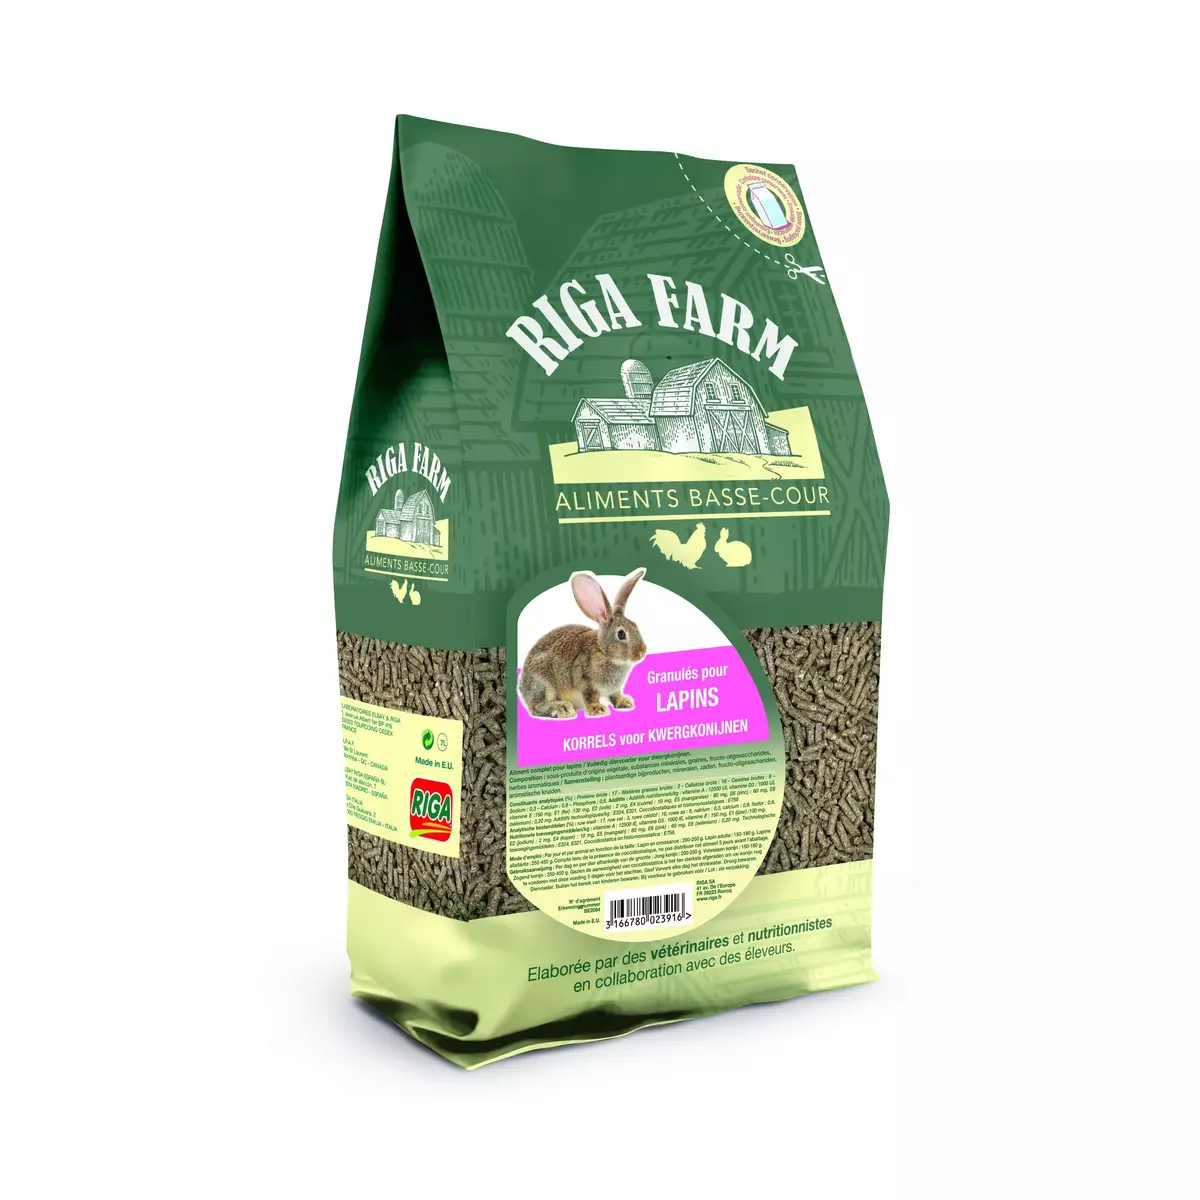 RIGA Farm granules pour lapins 3.8kg